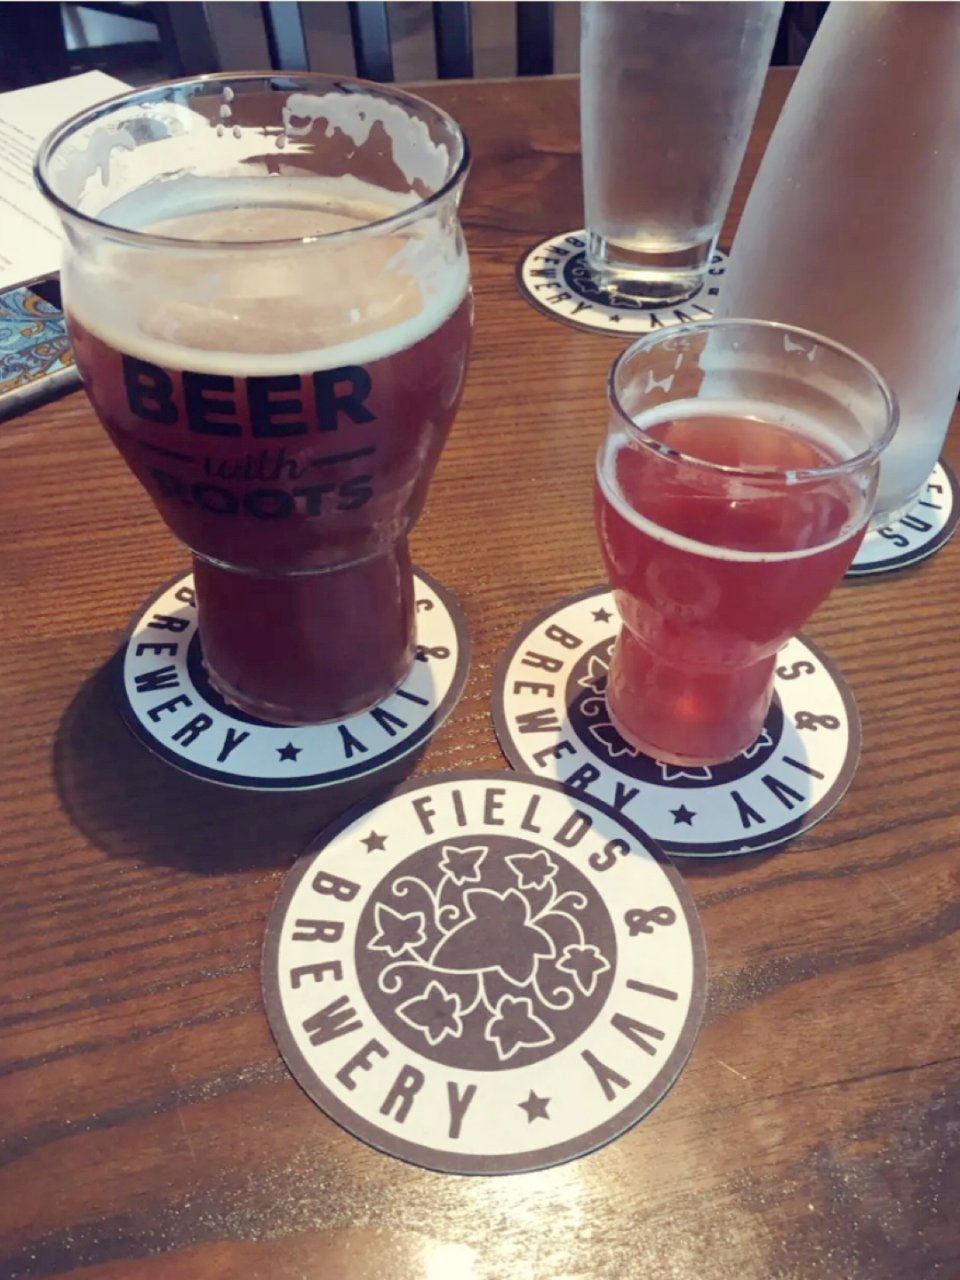 Fields&Ivy Brewery